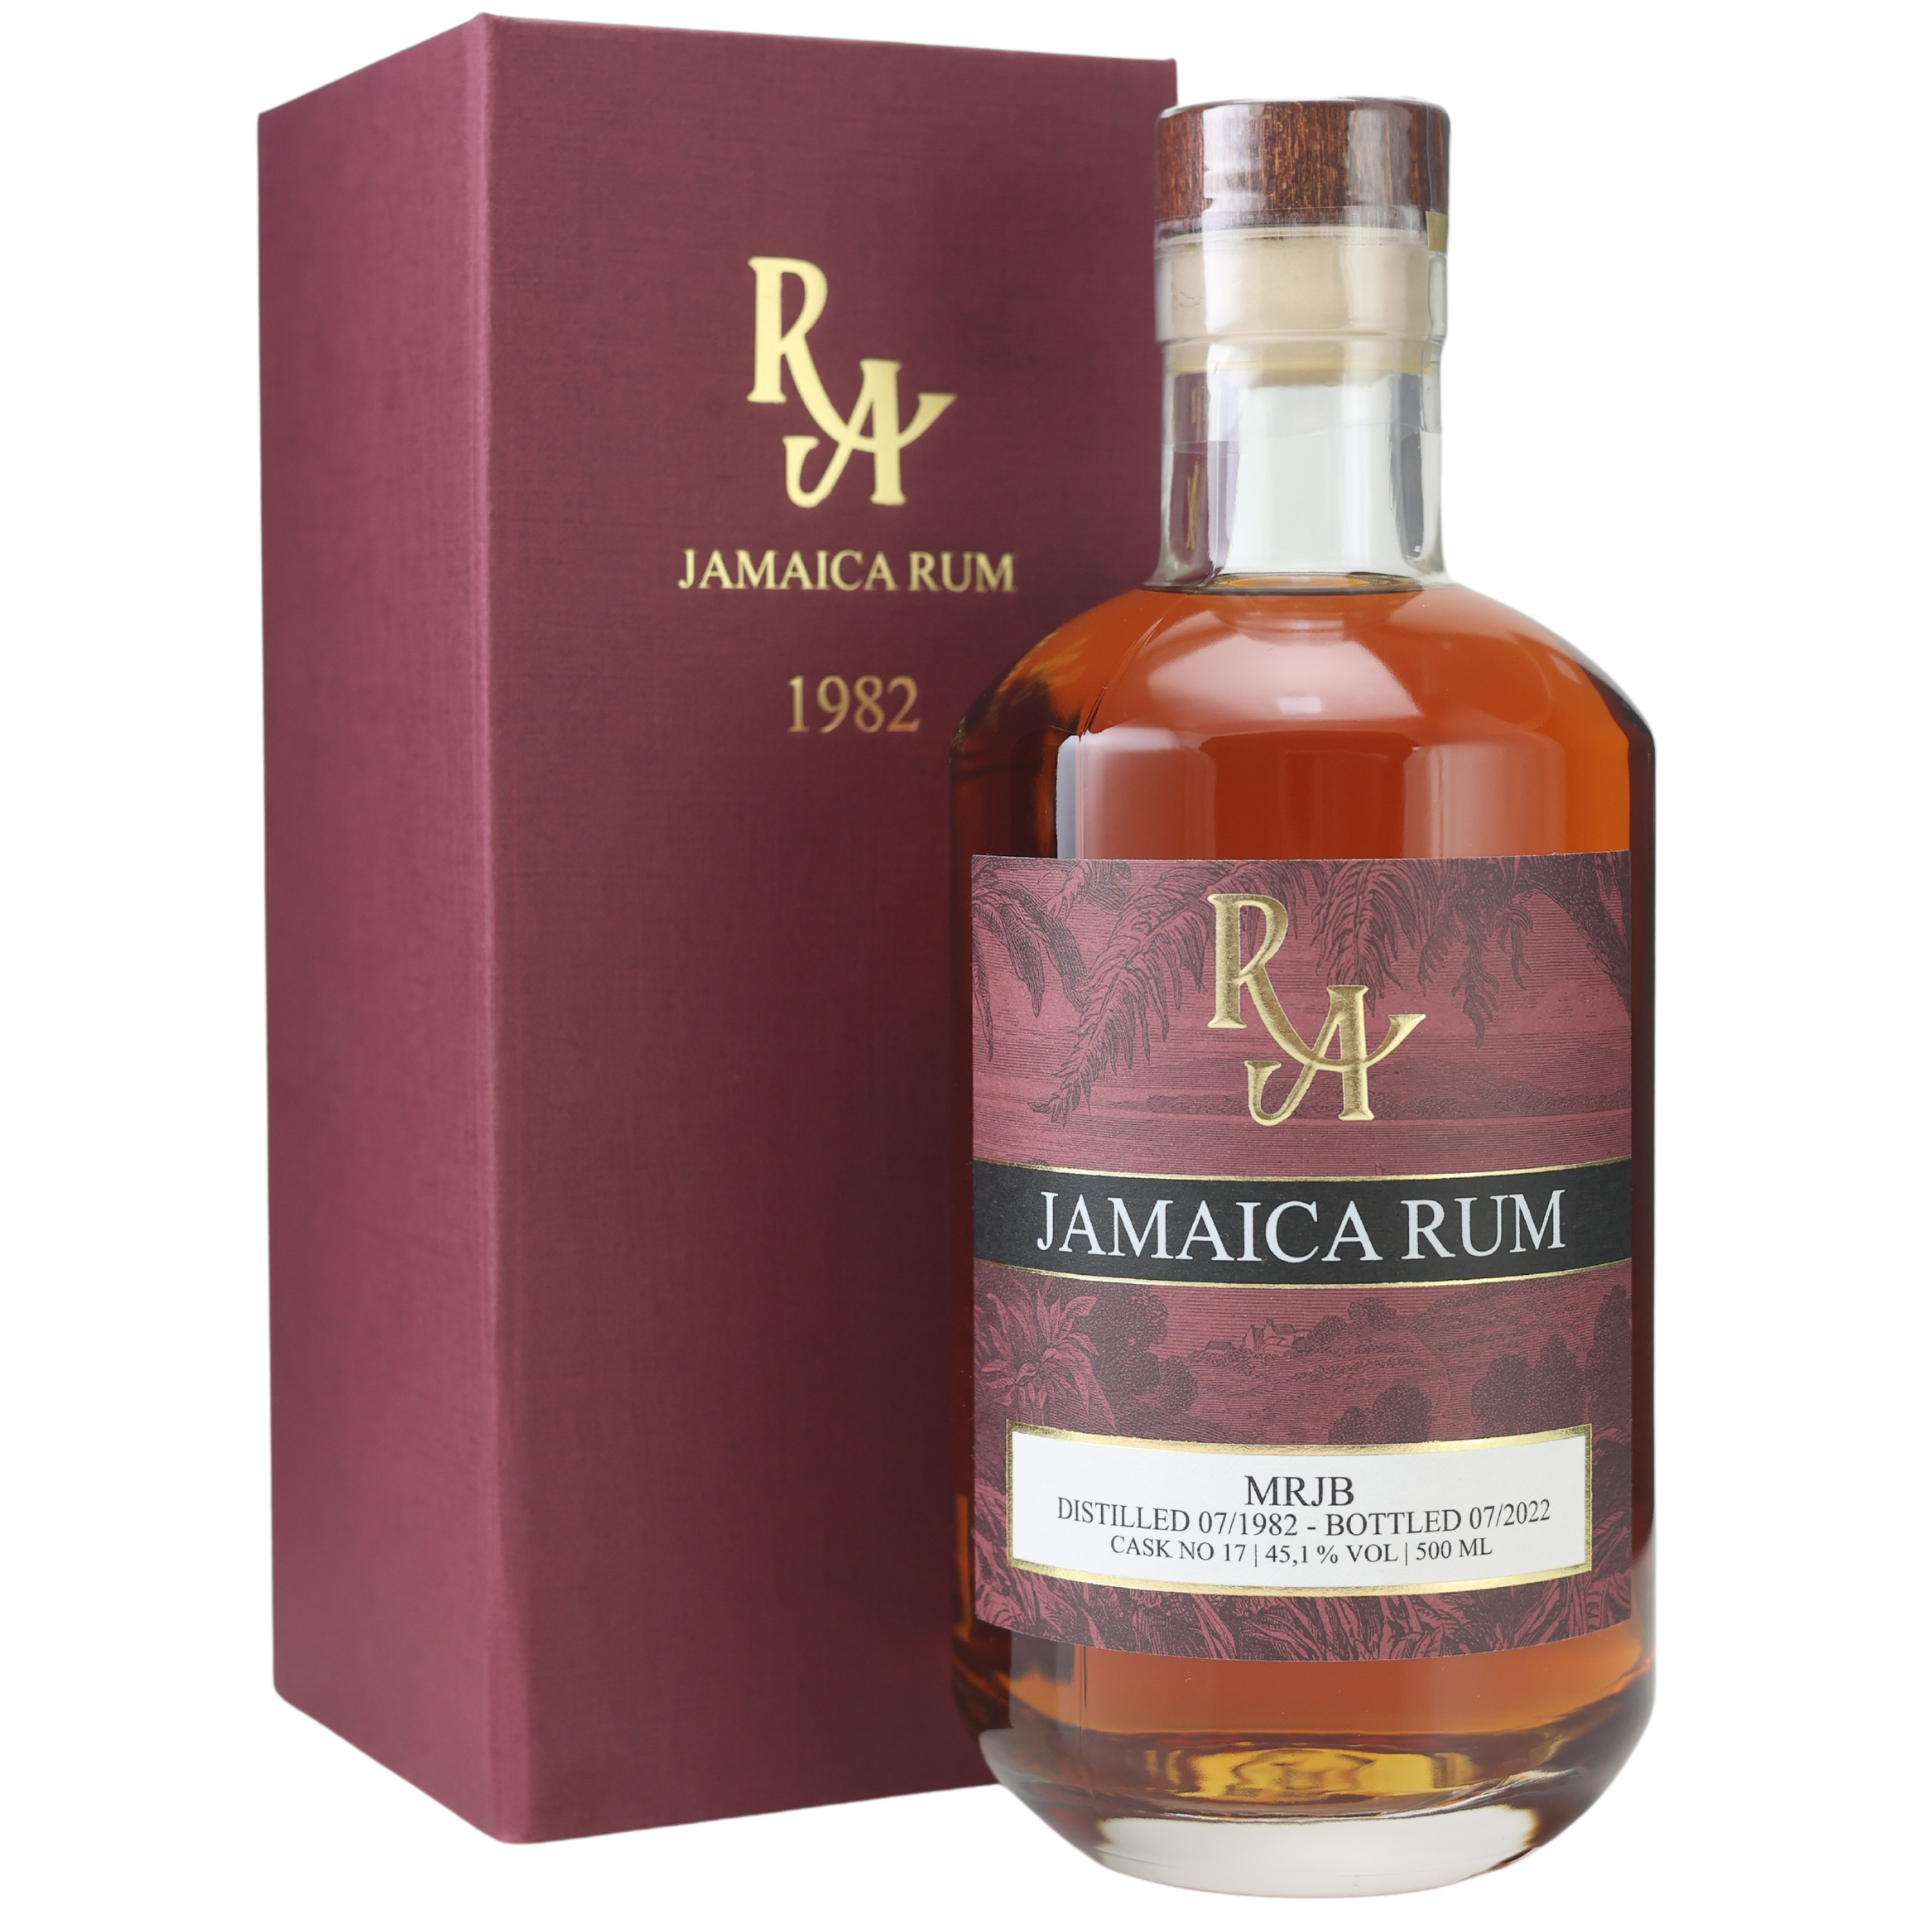 Rum Artesanal Jamaica MRJB 1982 Single Cask Rum 45,1% 0,5l